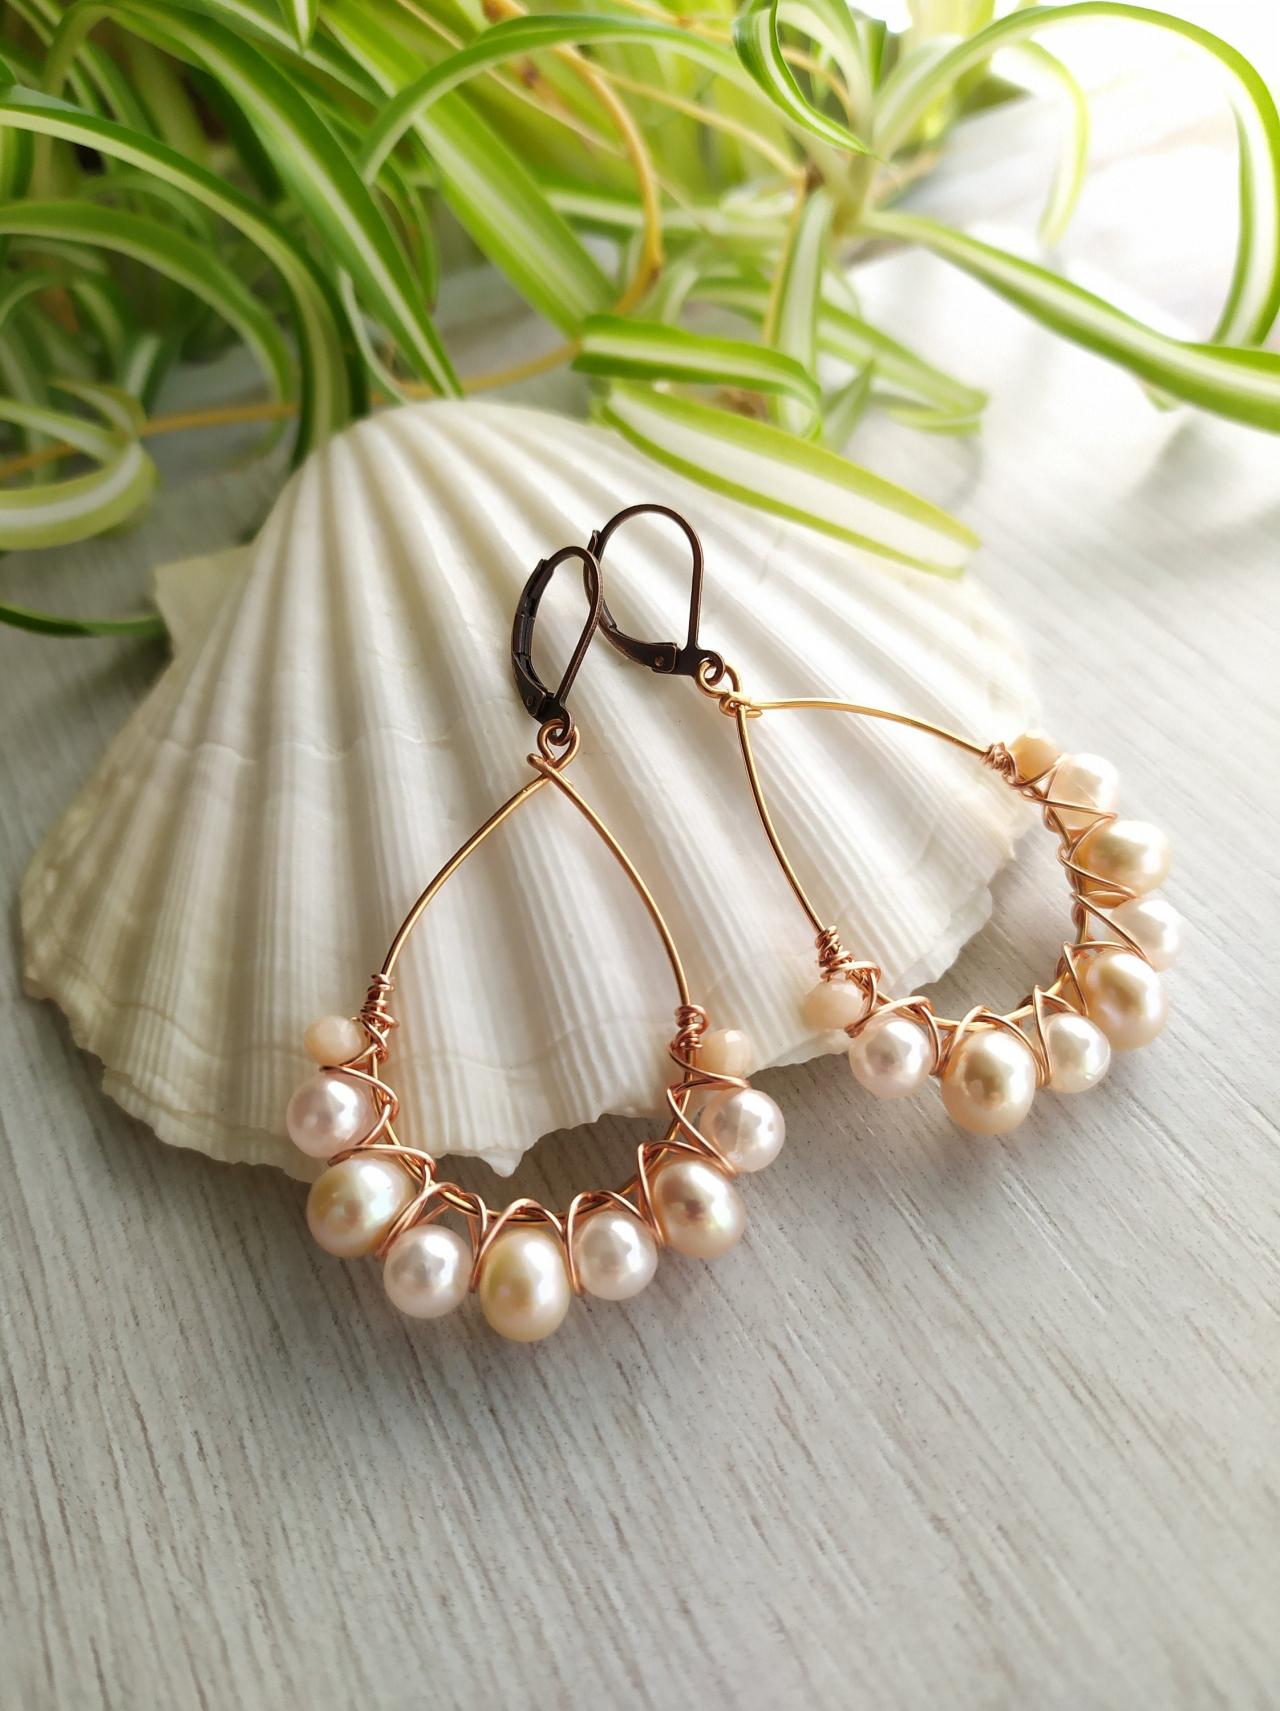 Fresh Water Pearl Hoops, Wire Wrapped Copper Hoop Earrings With Pearls,elegant Peach Pearl Dangles,beige Soft Pearl Chandeliers,gift For Her